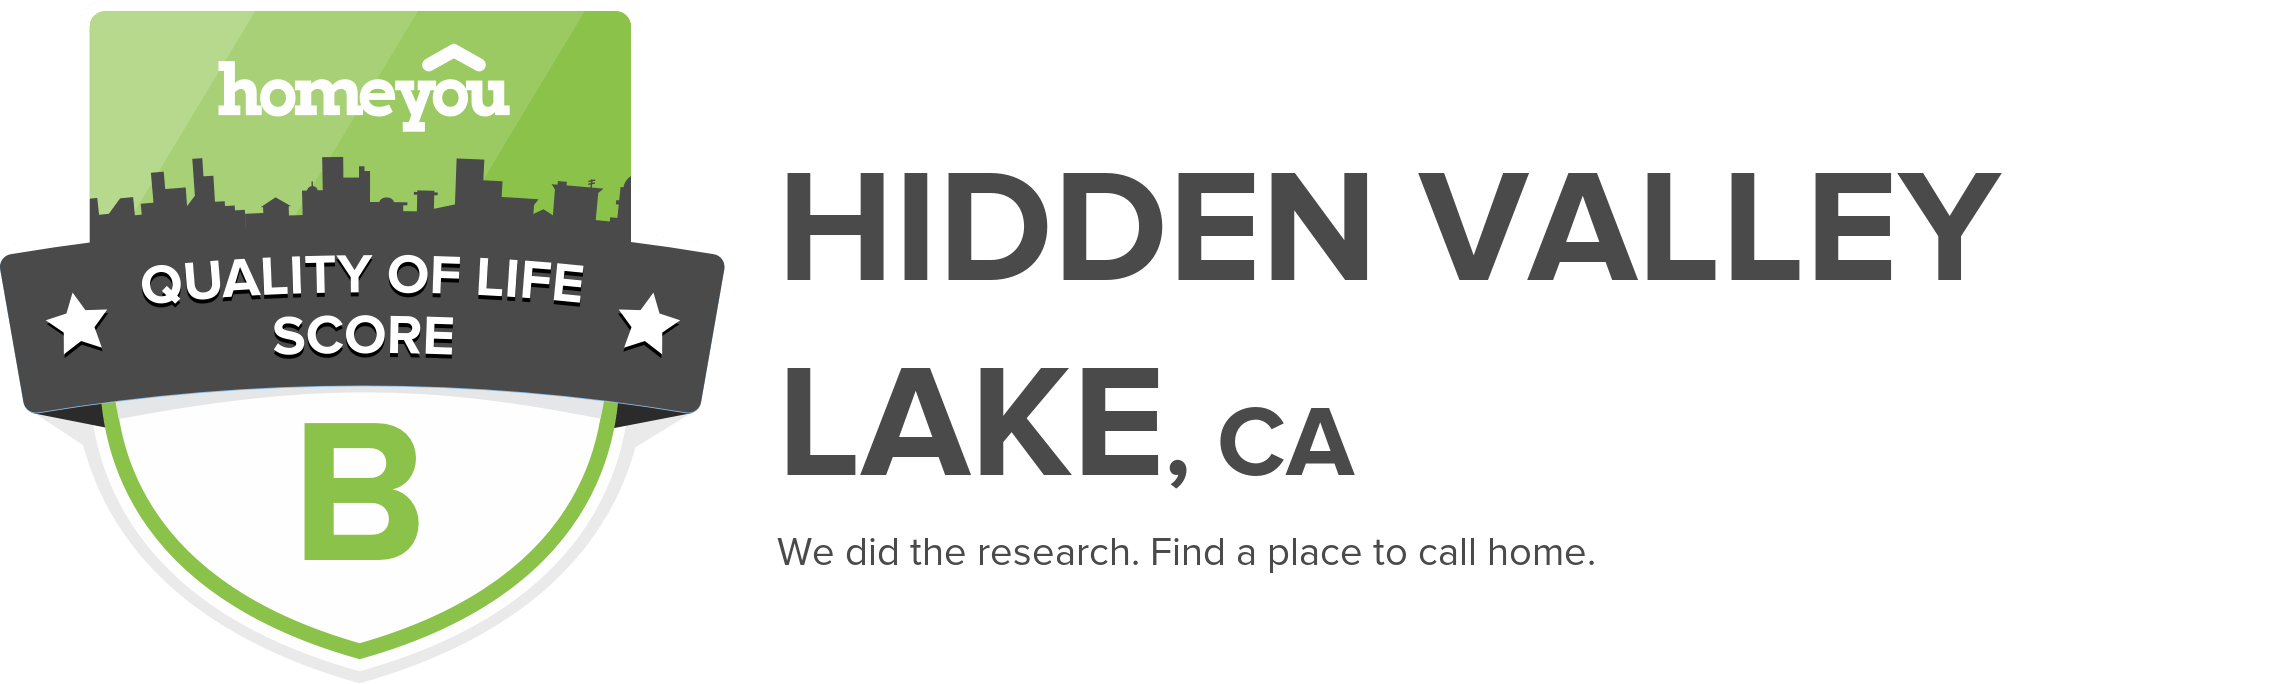 Hidden Valley Lake, CA